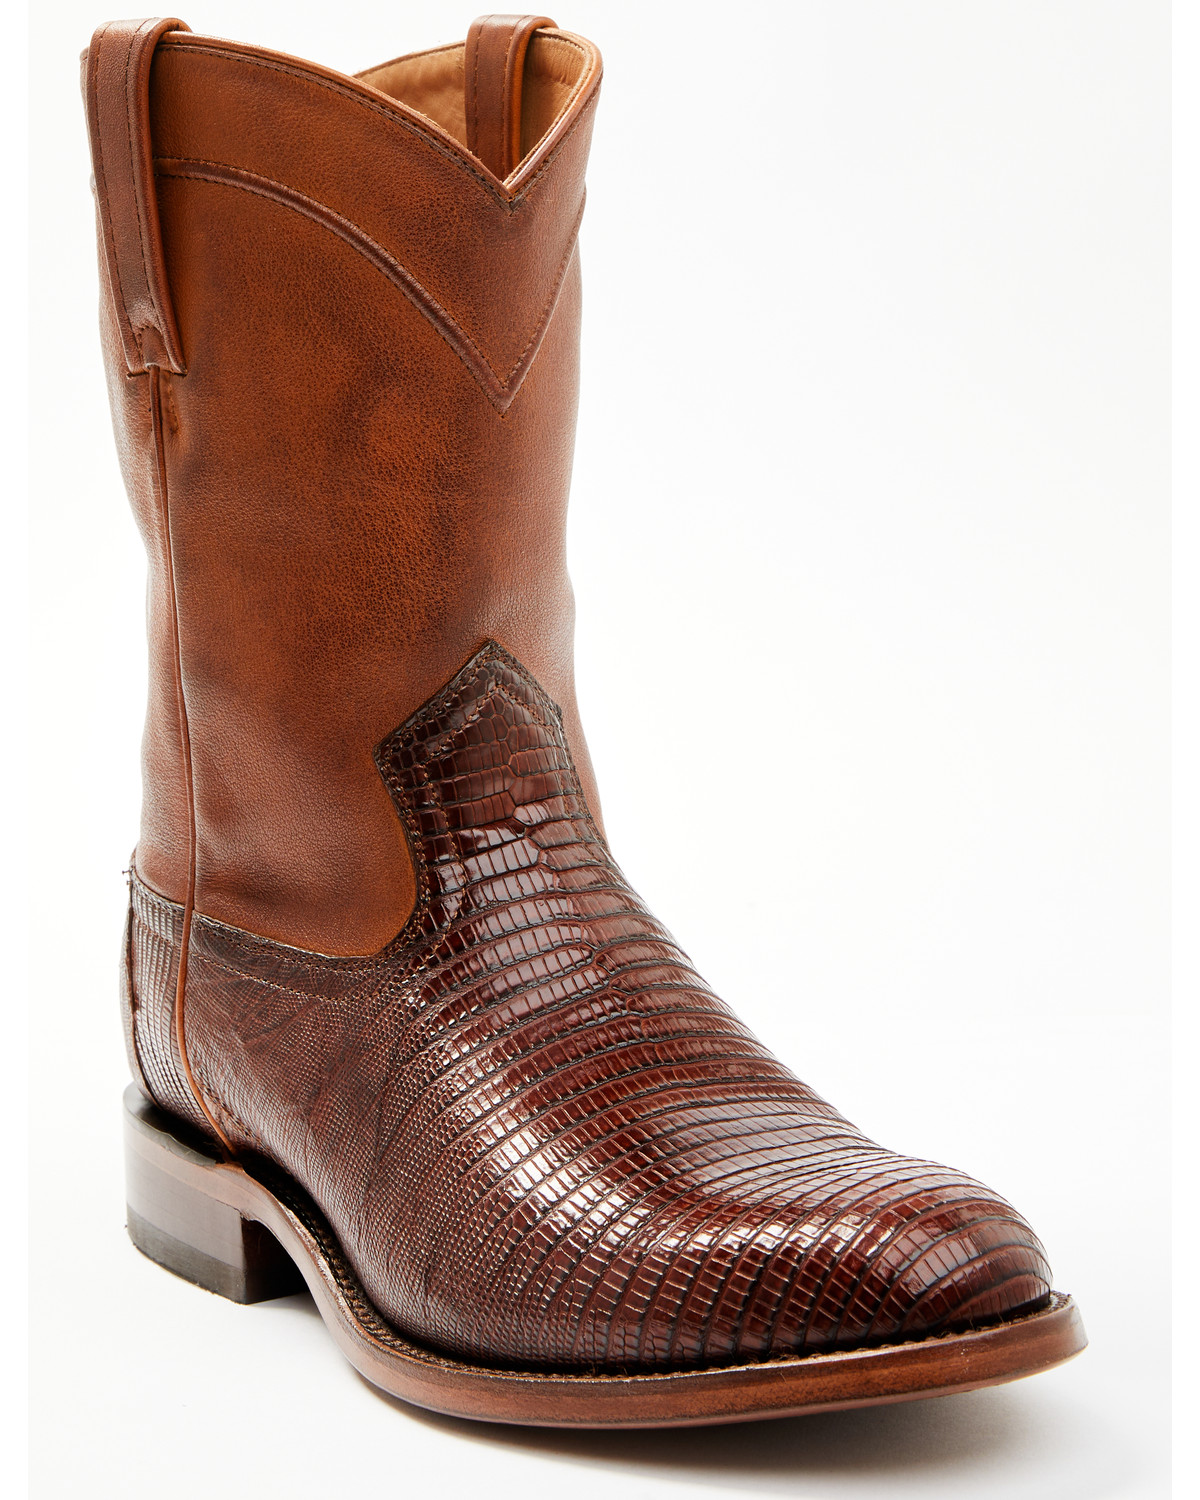 Men's Lizard Cowboy Boots